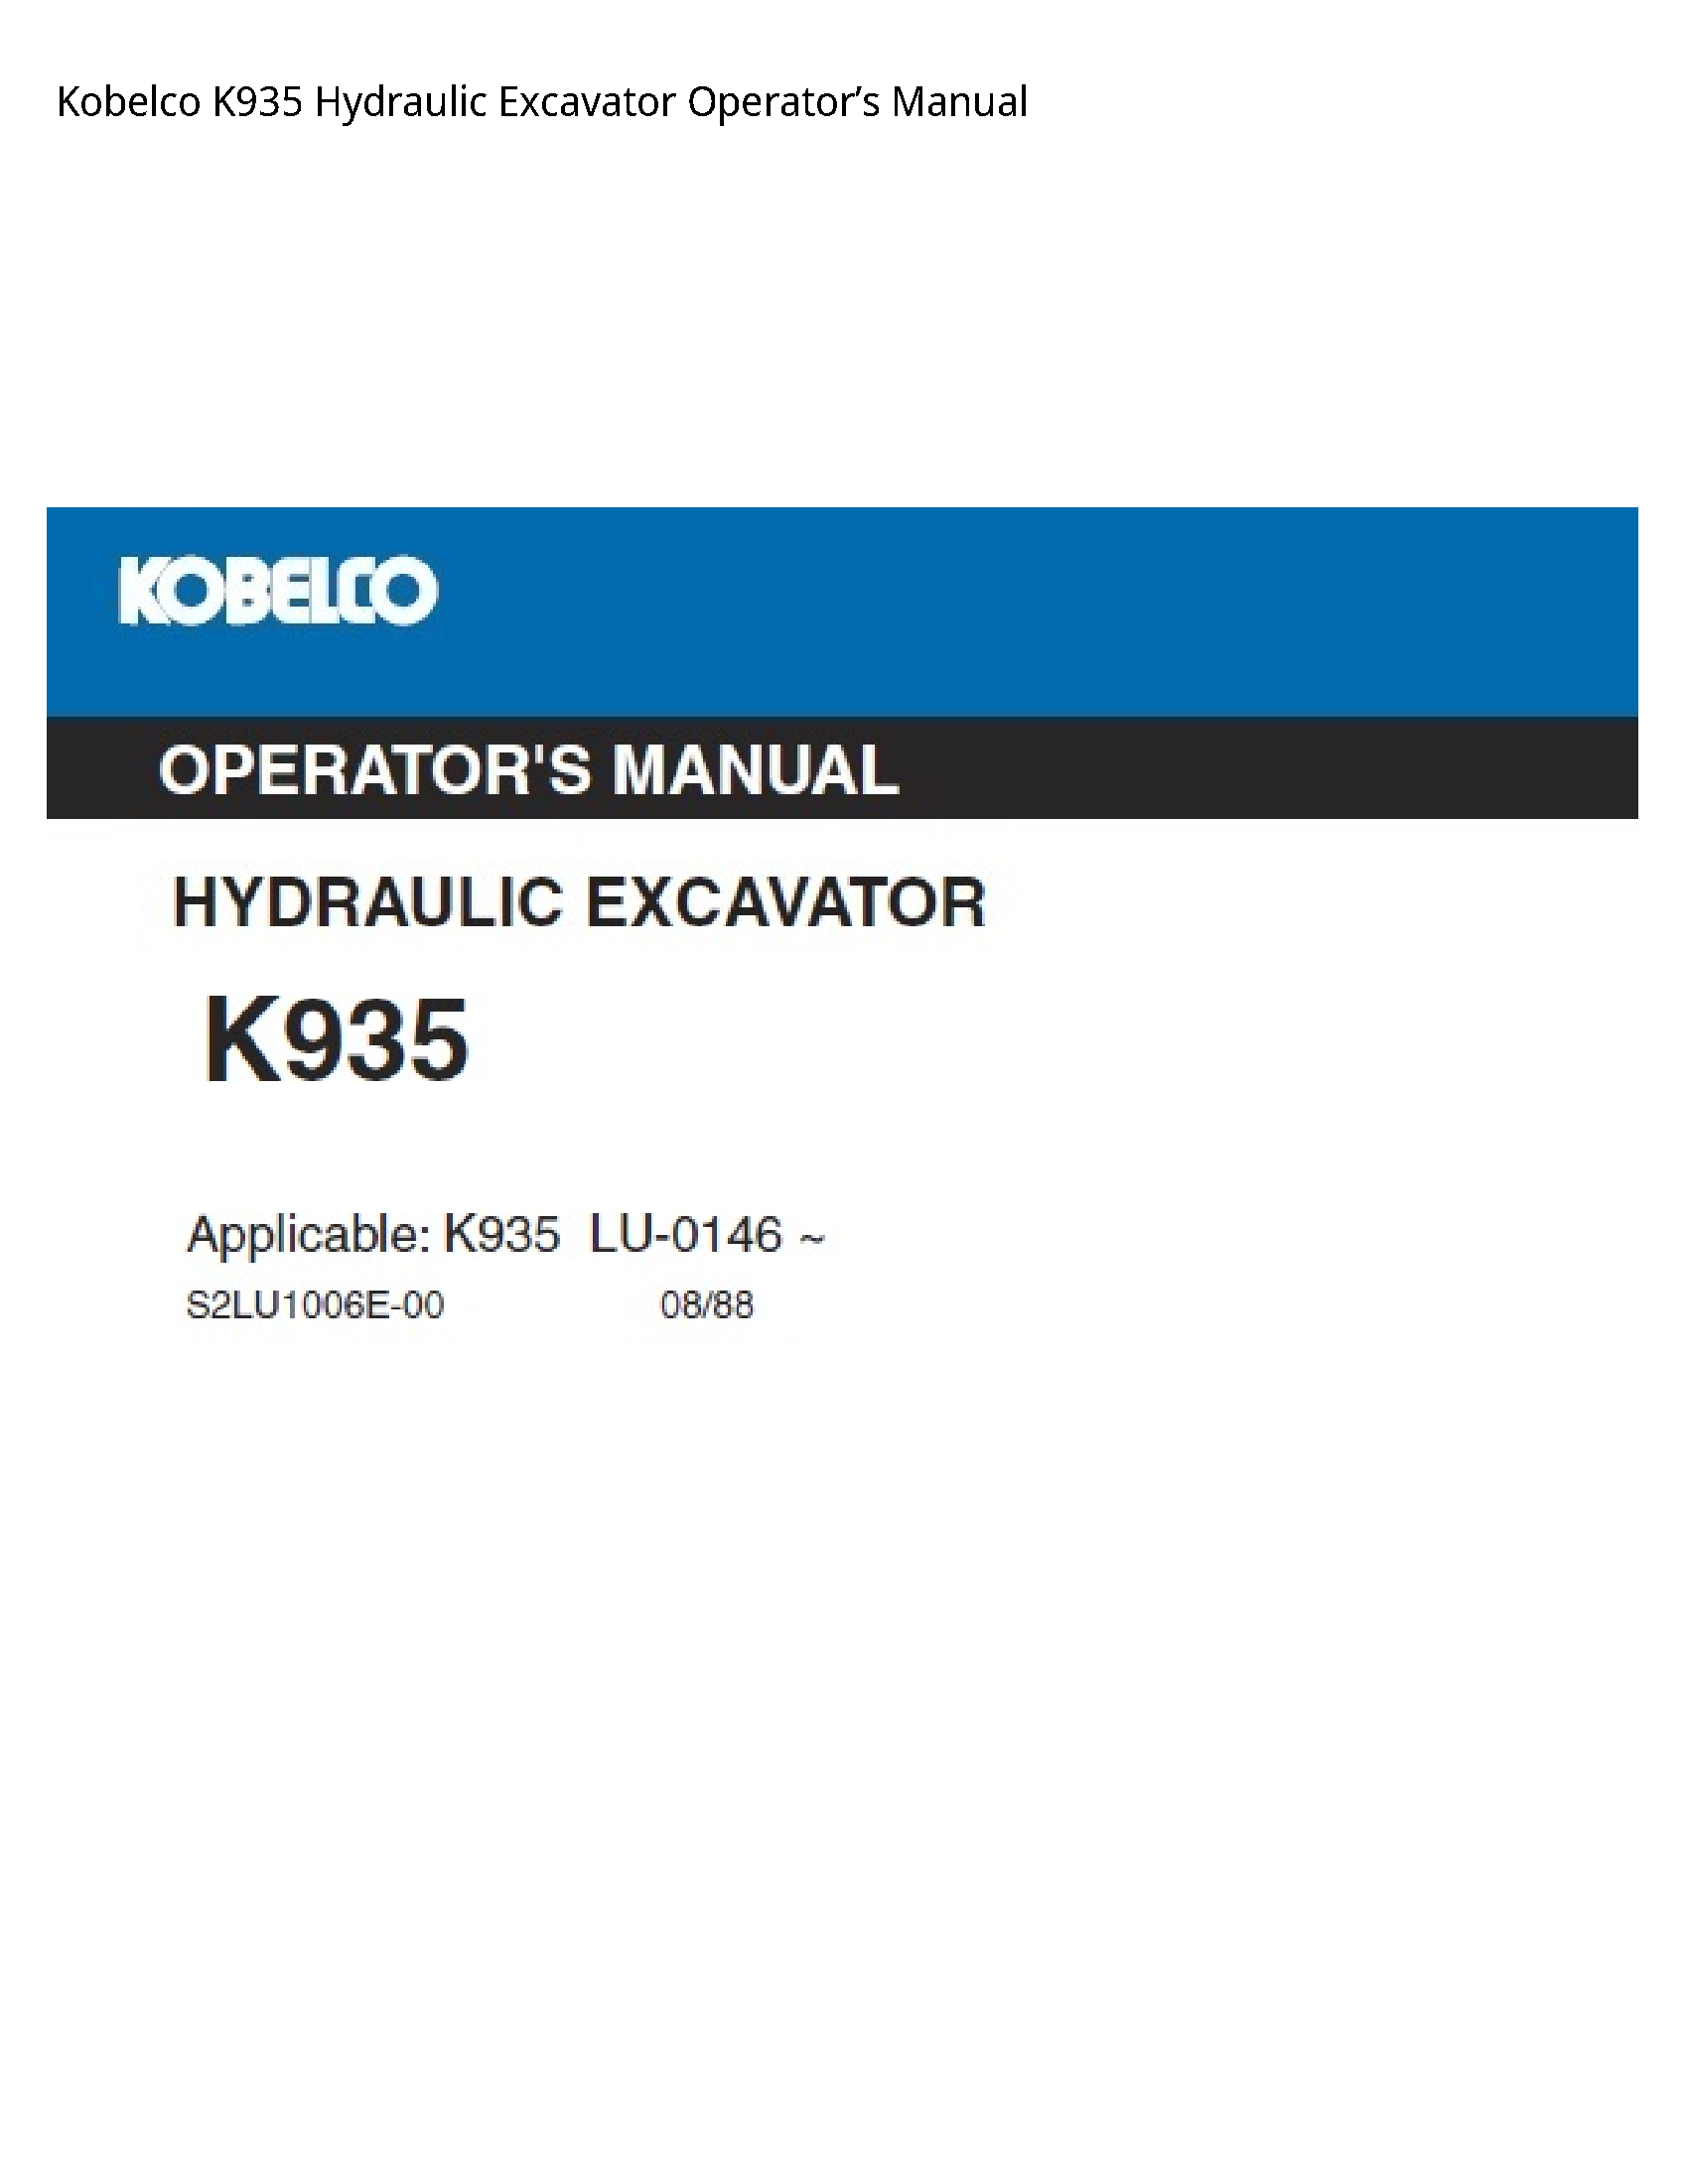 Kobelco K935 Hydraulic Excavator Operator’s manual